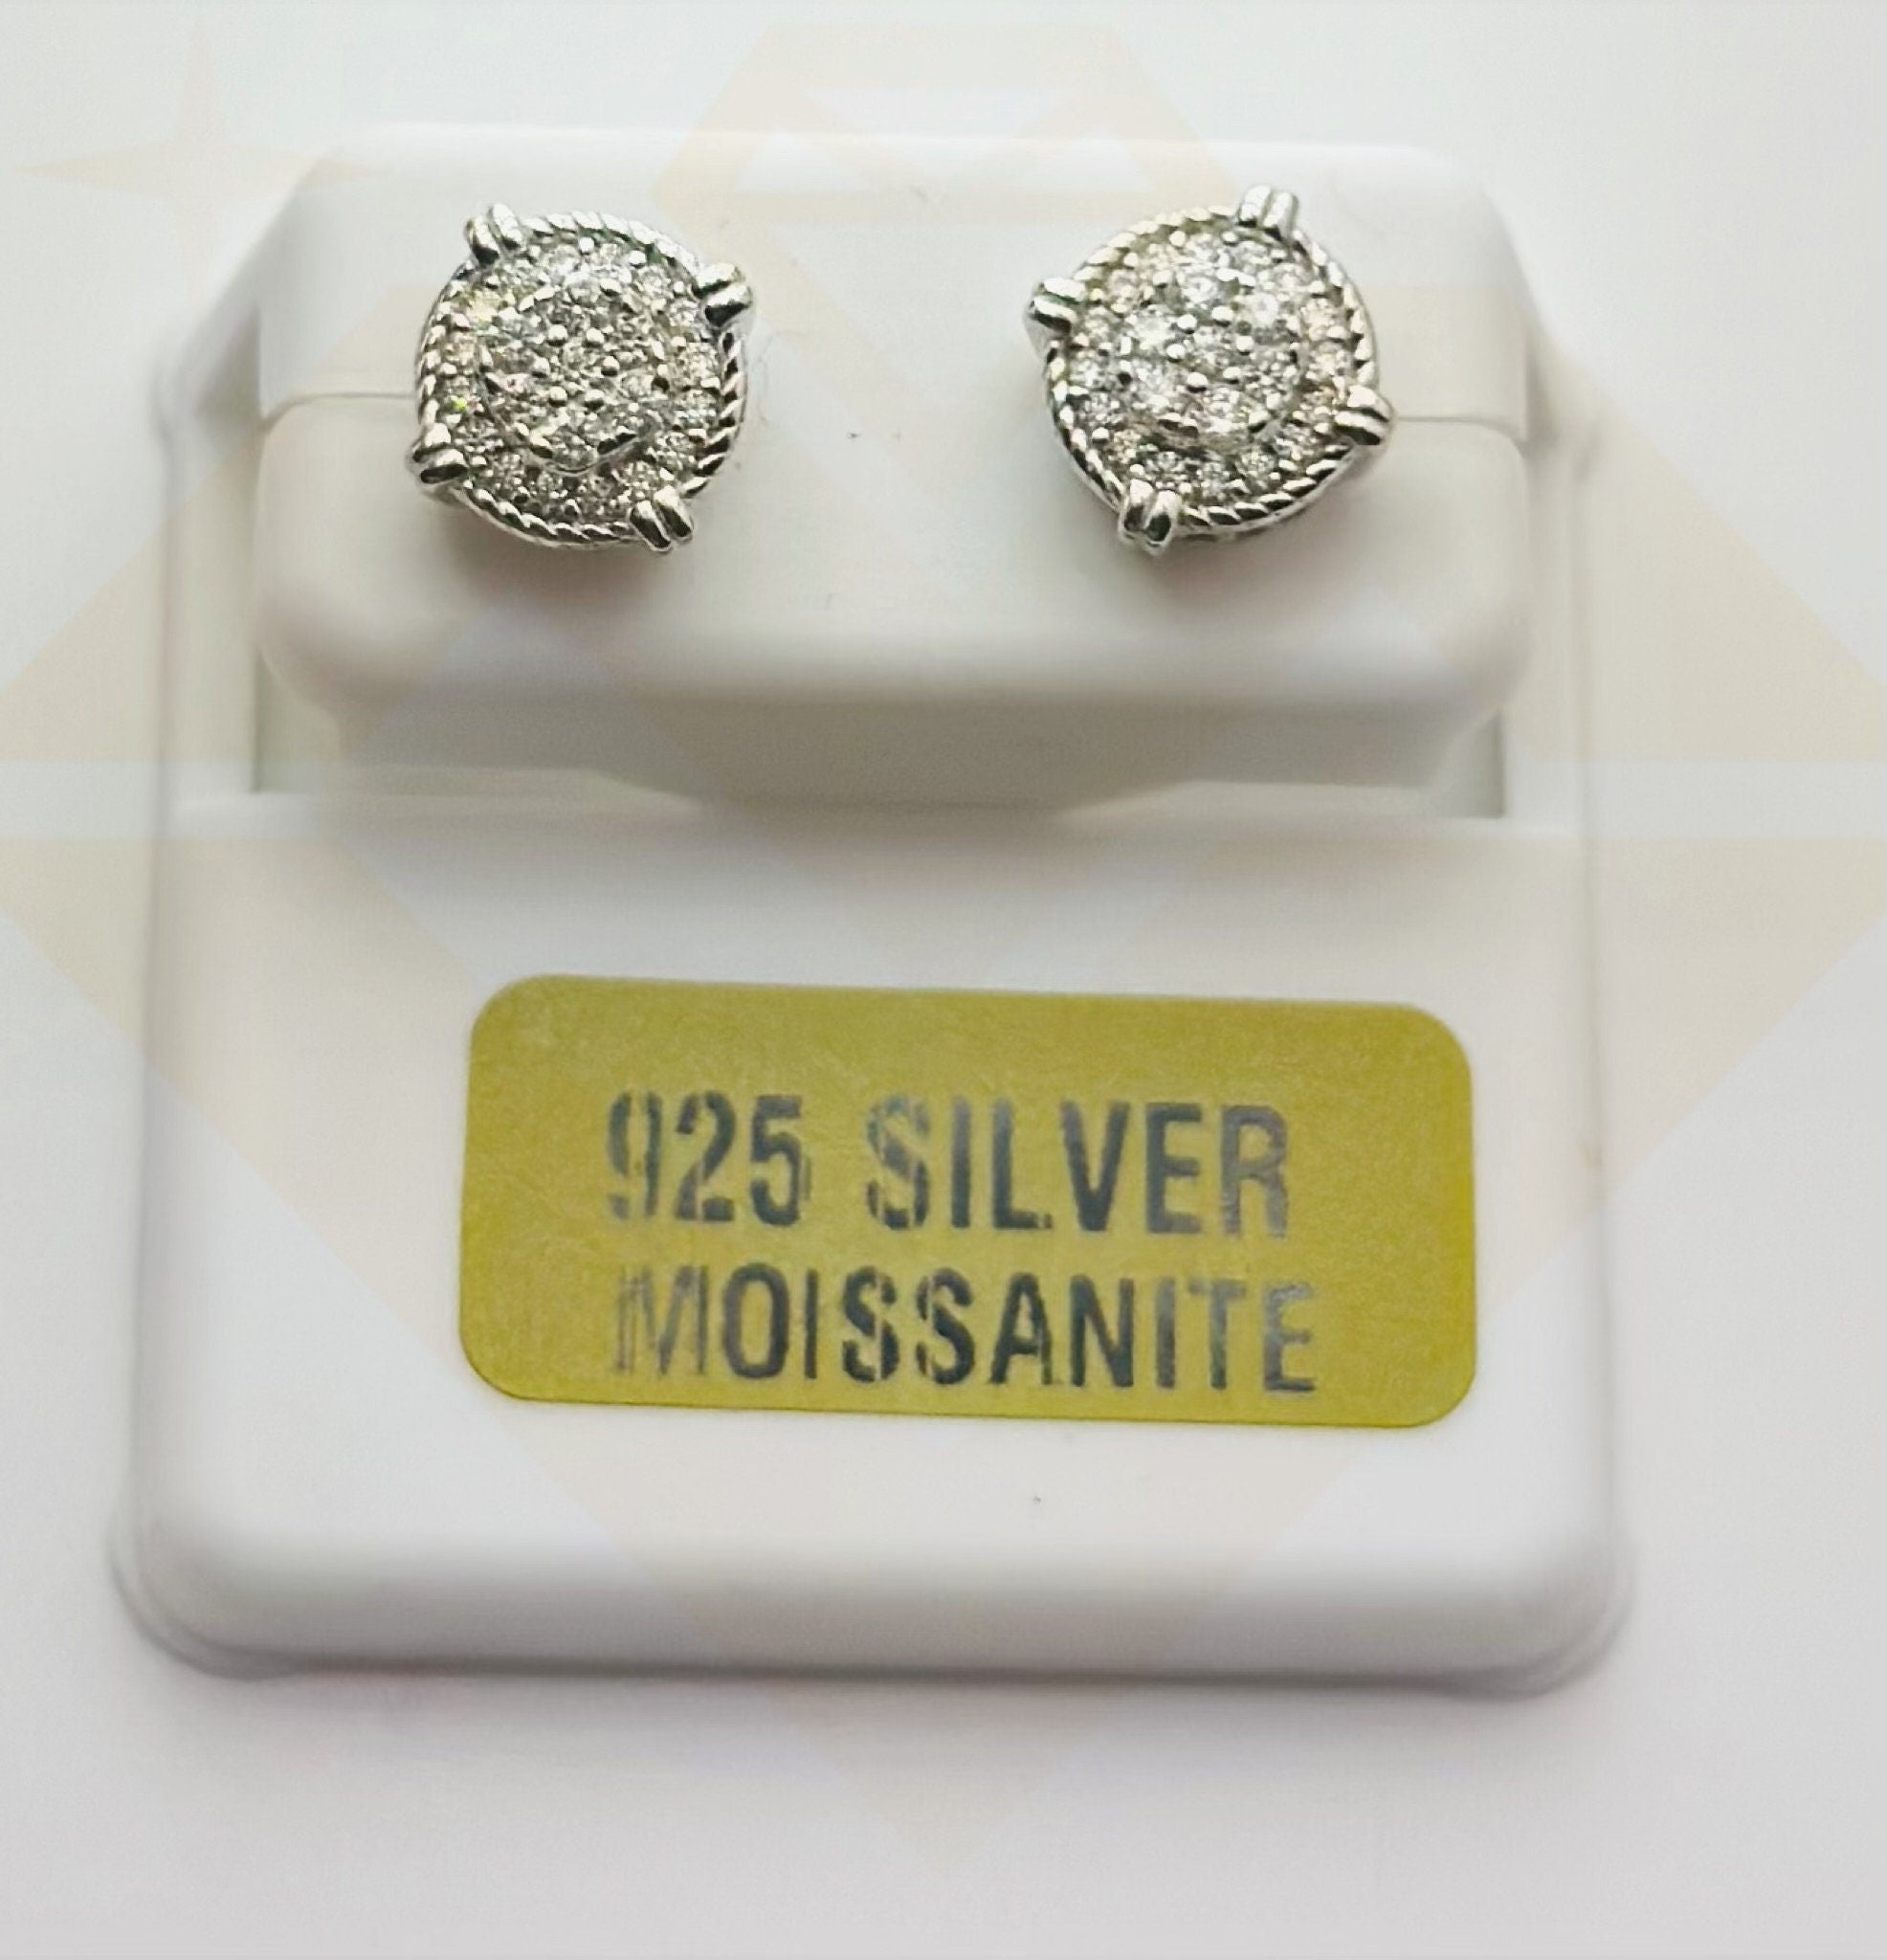 Iced out VVS Gra certified Moissanite Diamond custom designed earrings, Screwback secured daily wear studs, 100% passes diamond testers, HOT